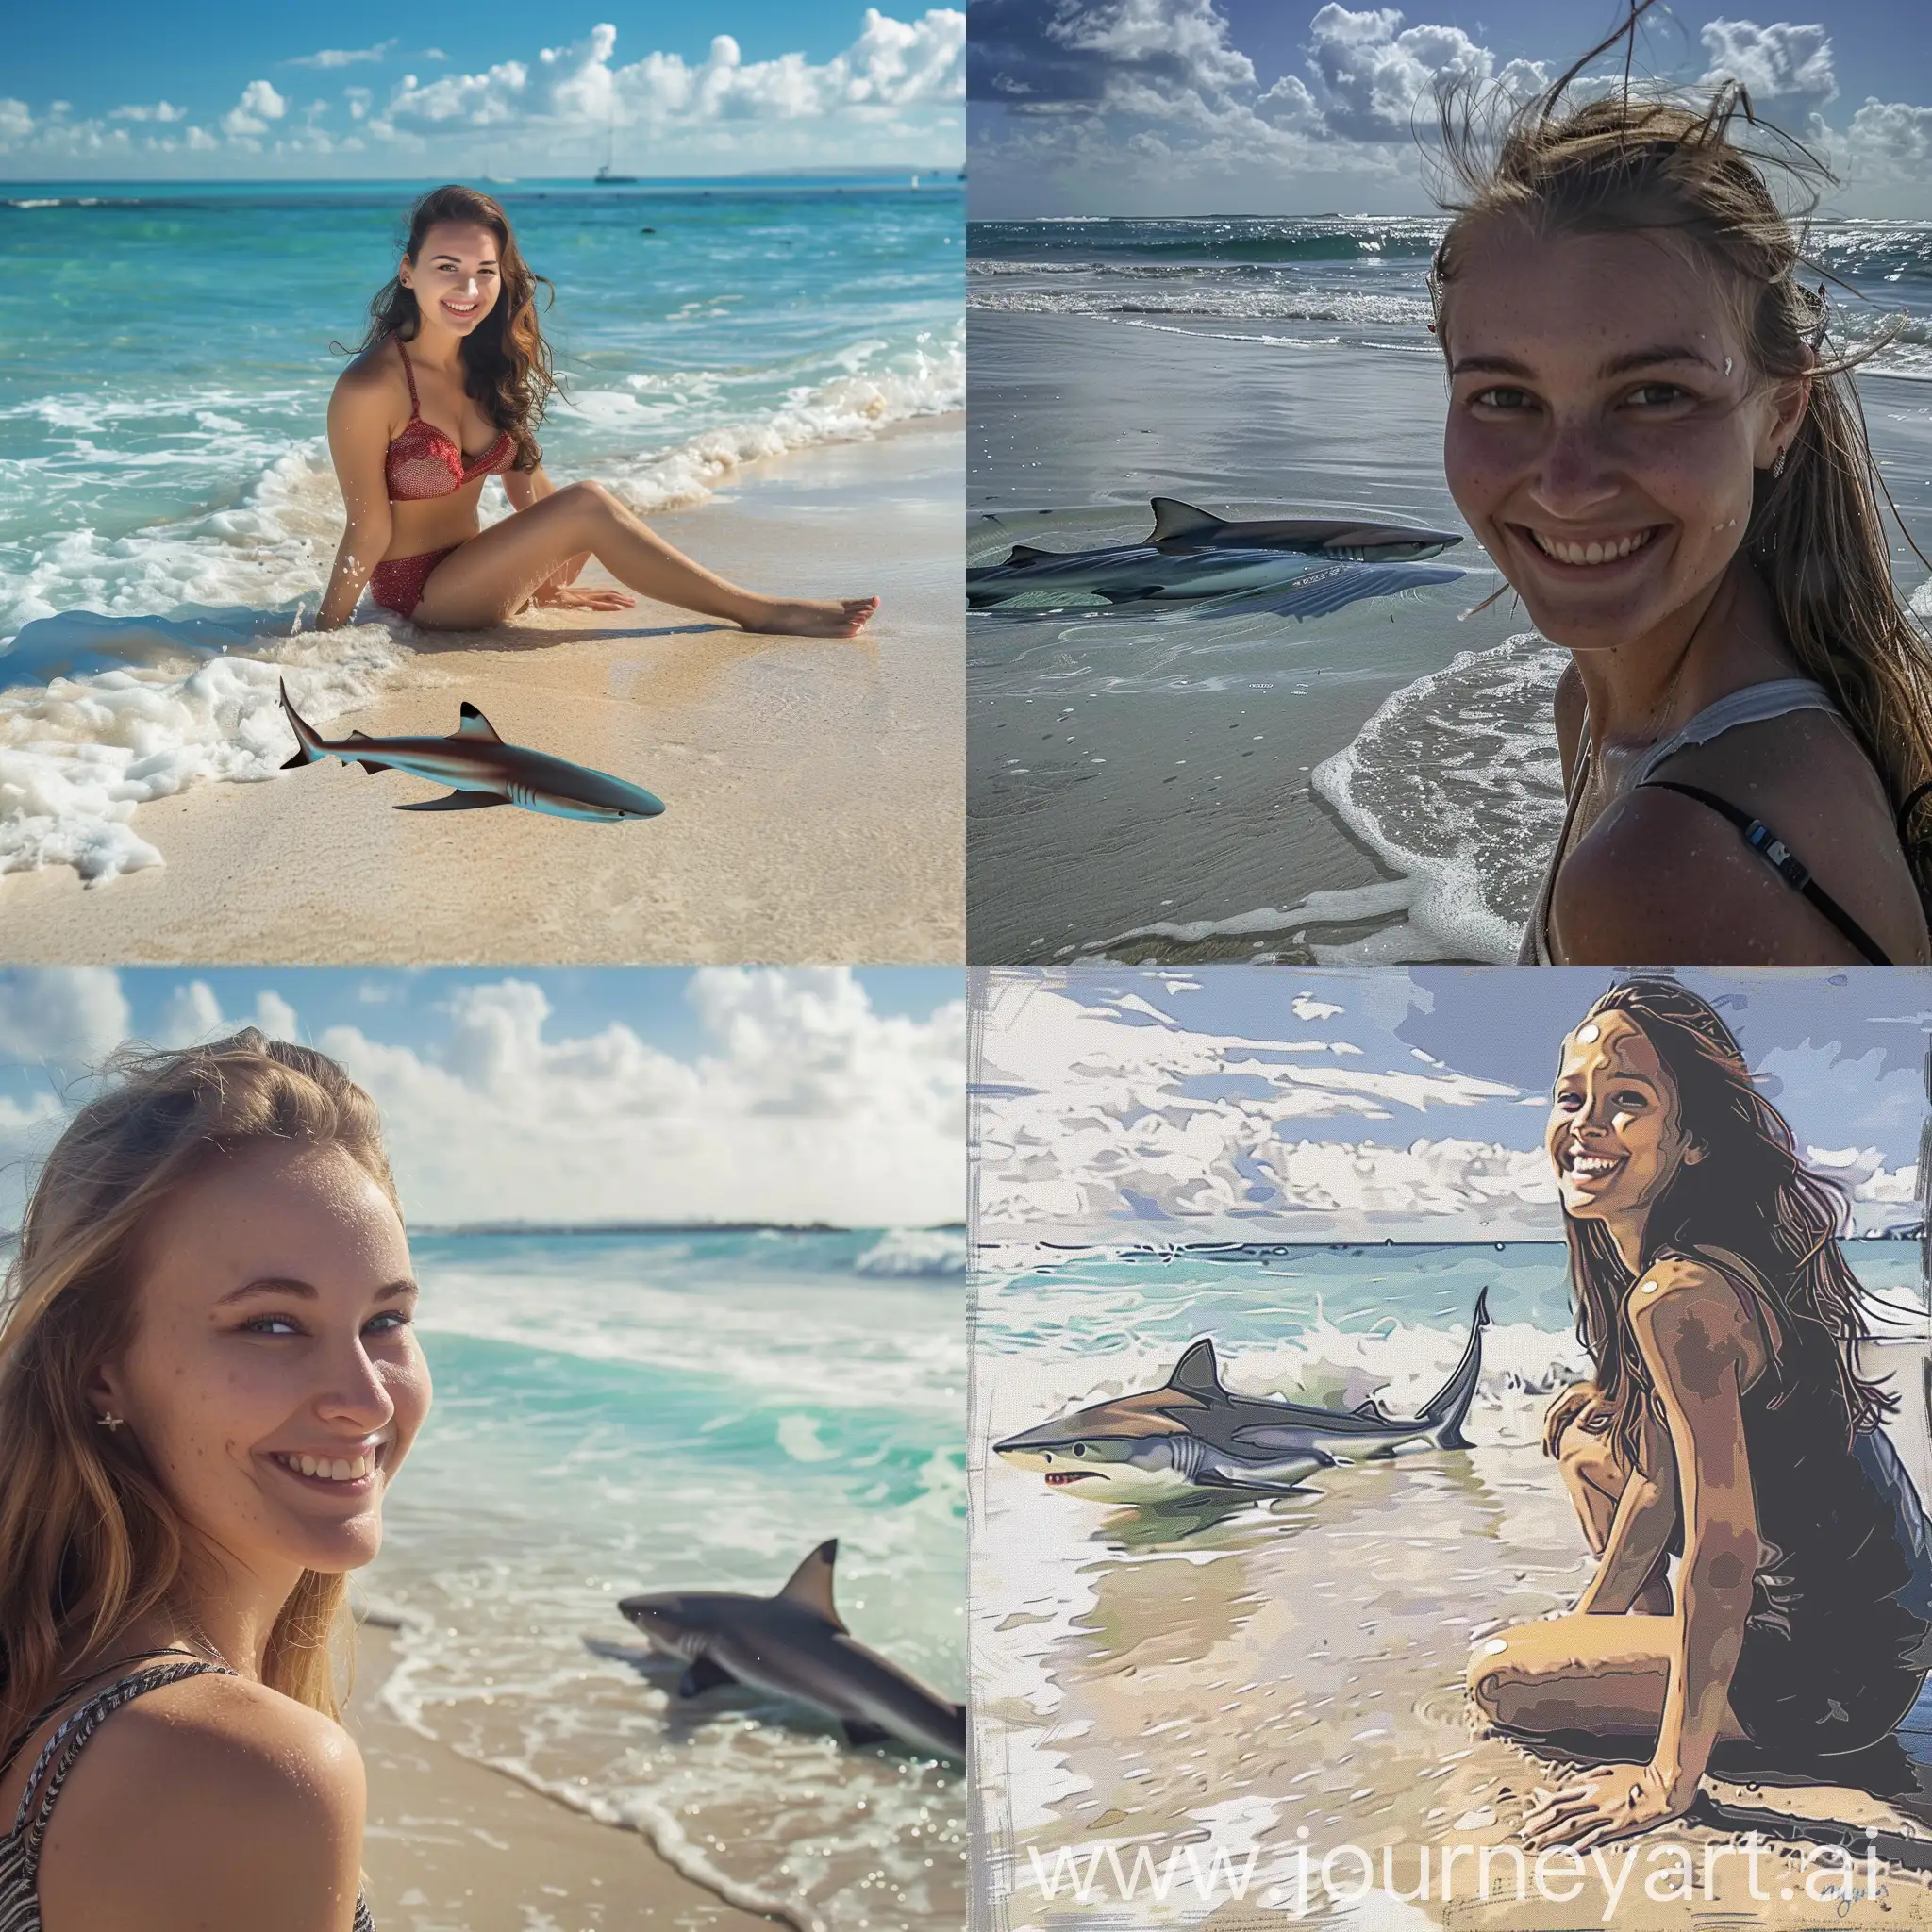 Joyful-Girl-Smiling-at-Beach-with-Shark-in-Ocean